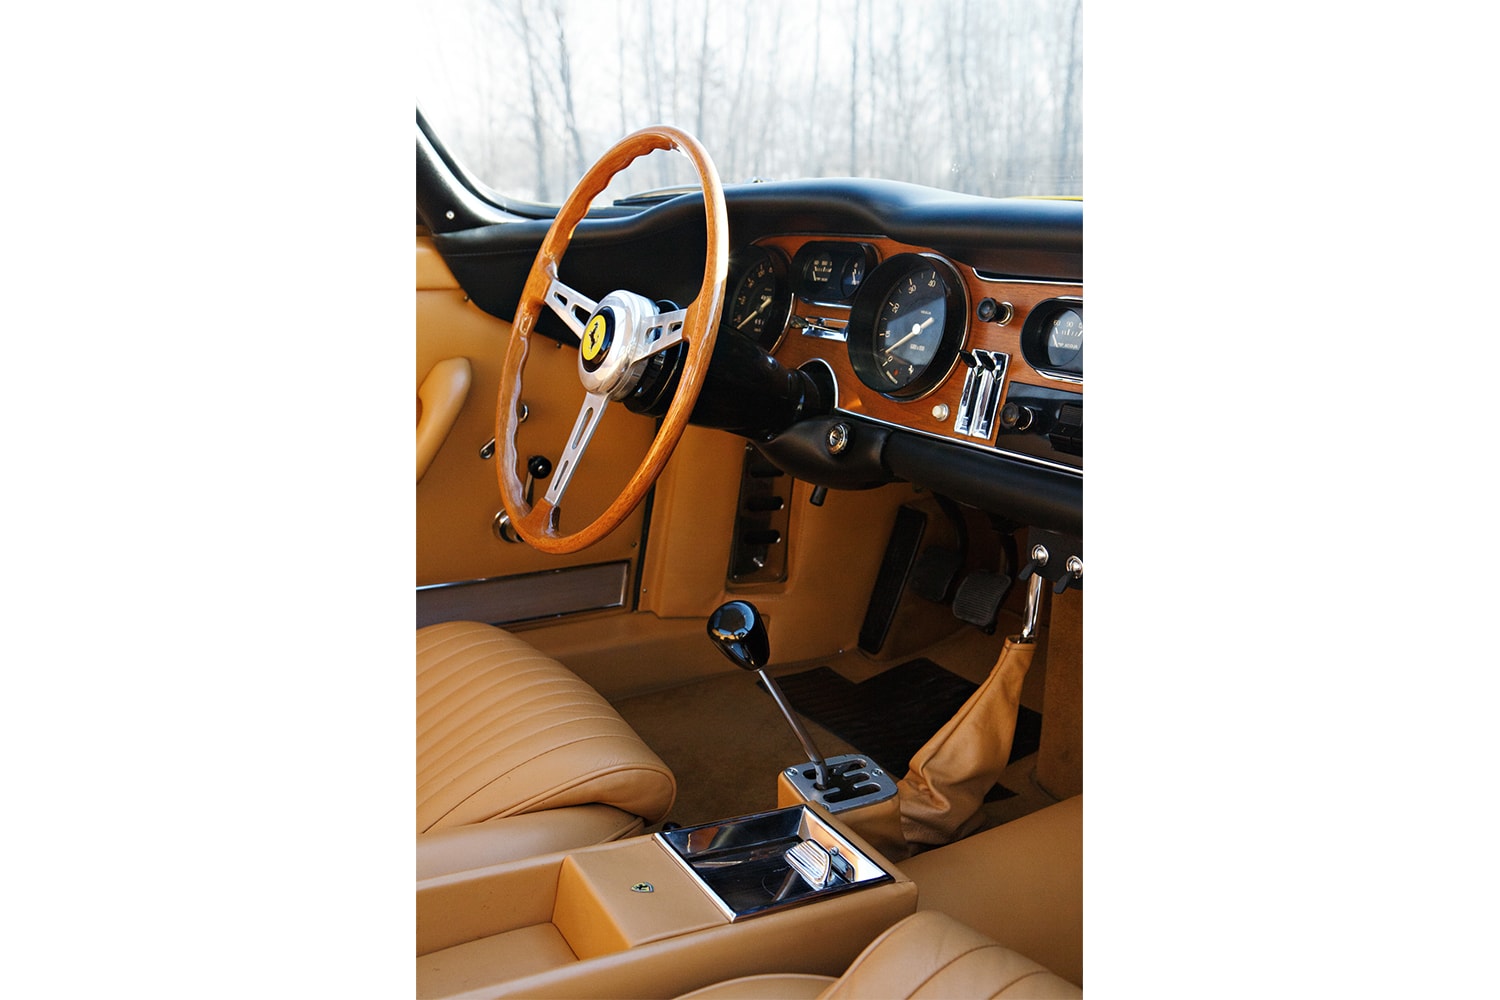 1964 Ferrari 275 GTB Prototype Gooding Company Auction cars supercar sports luxury Italian auctions 